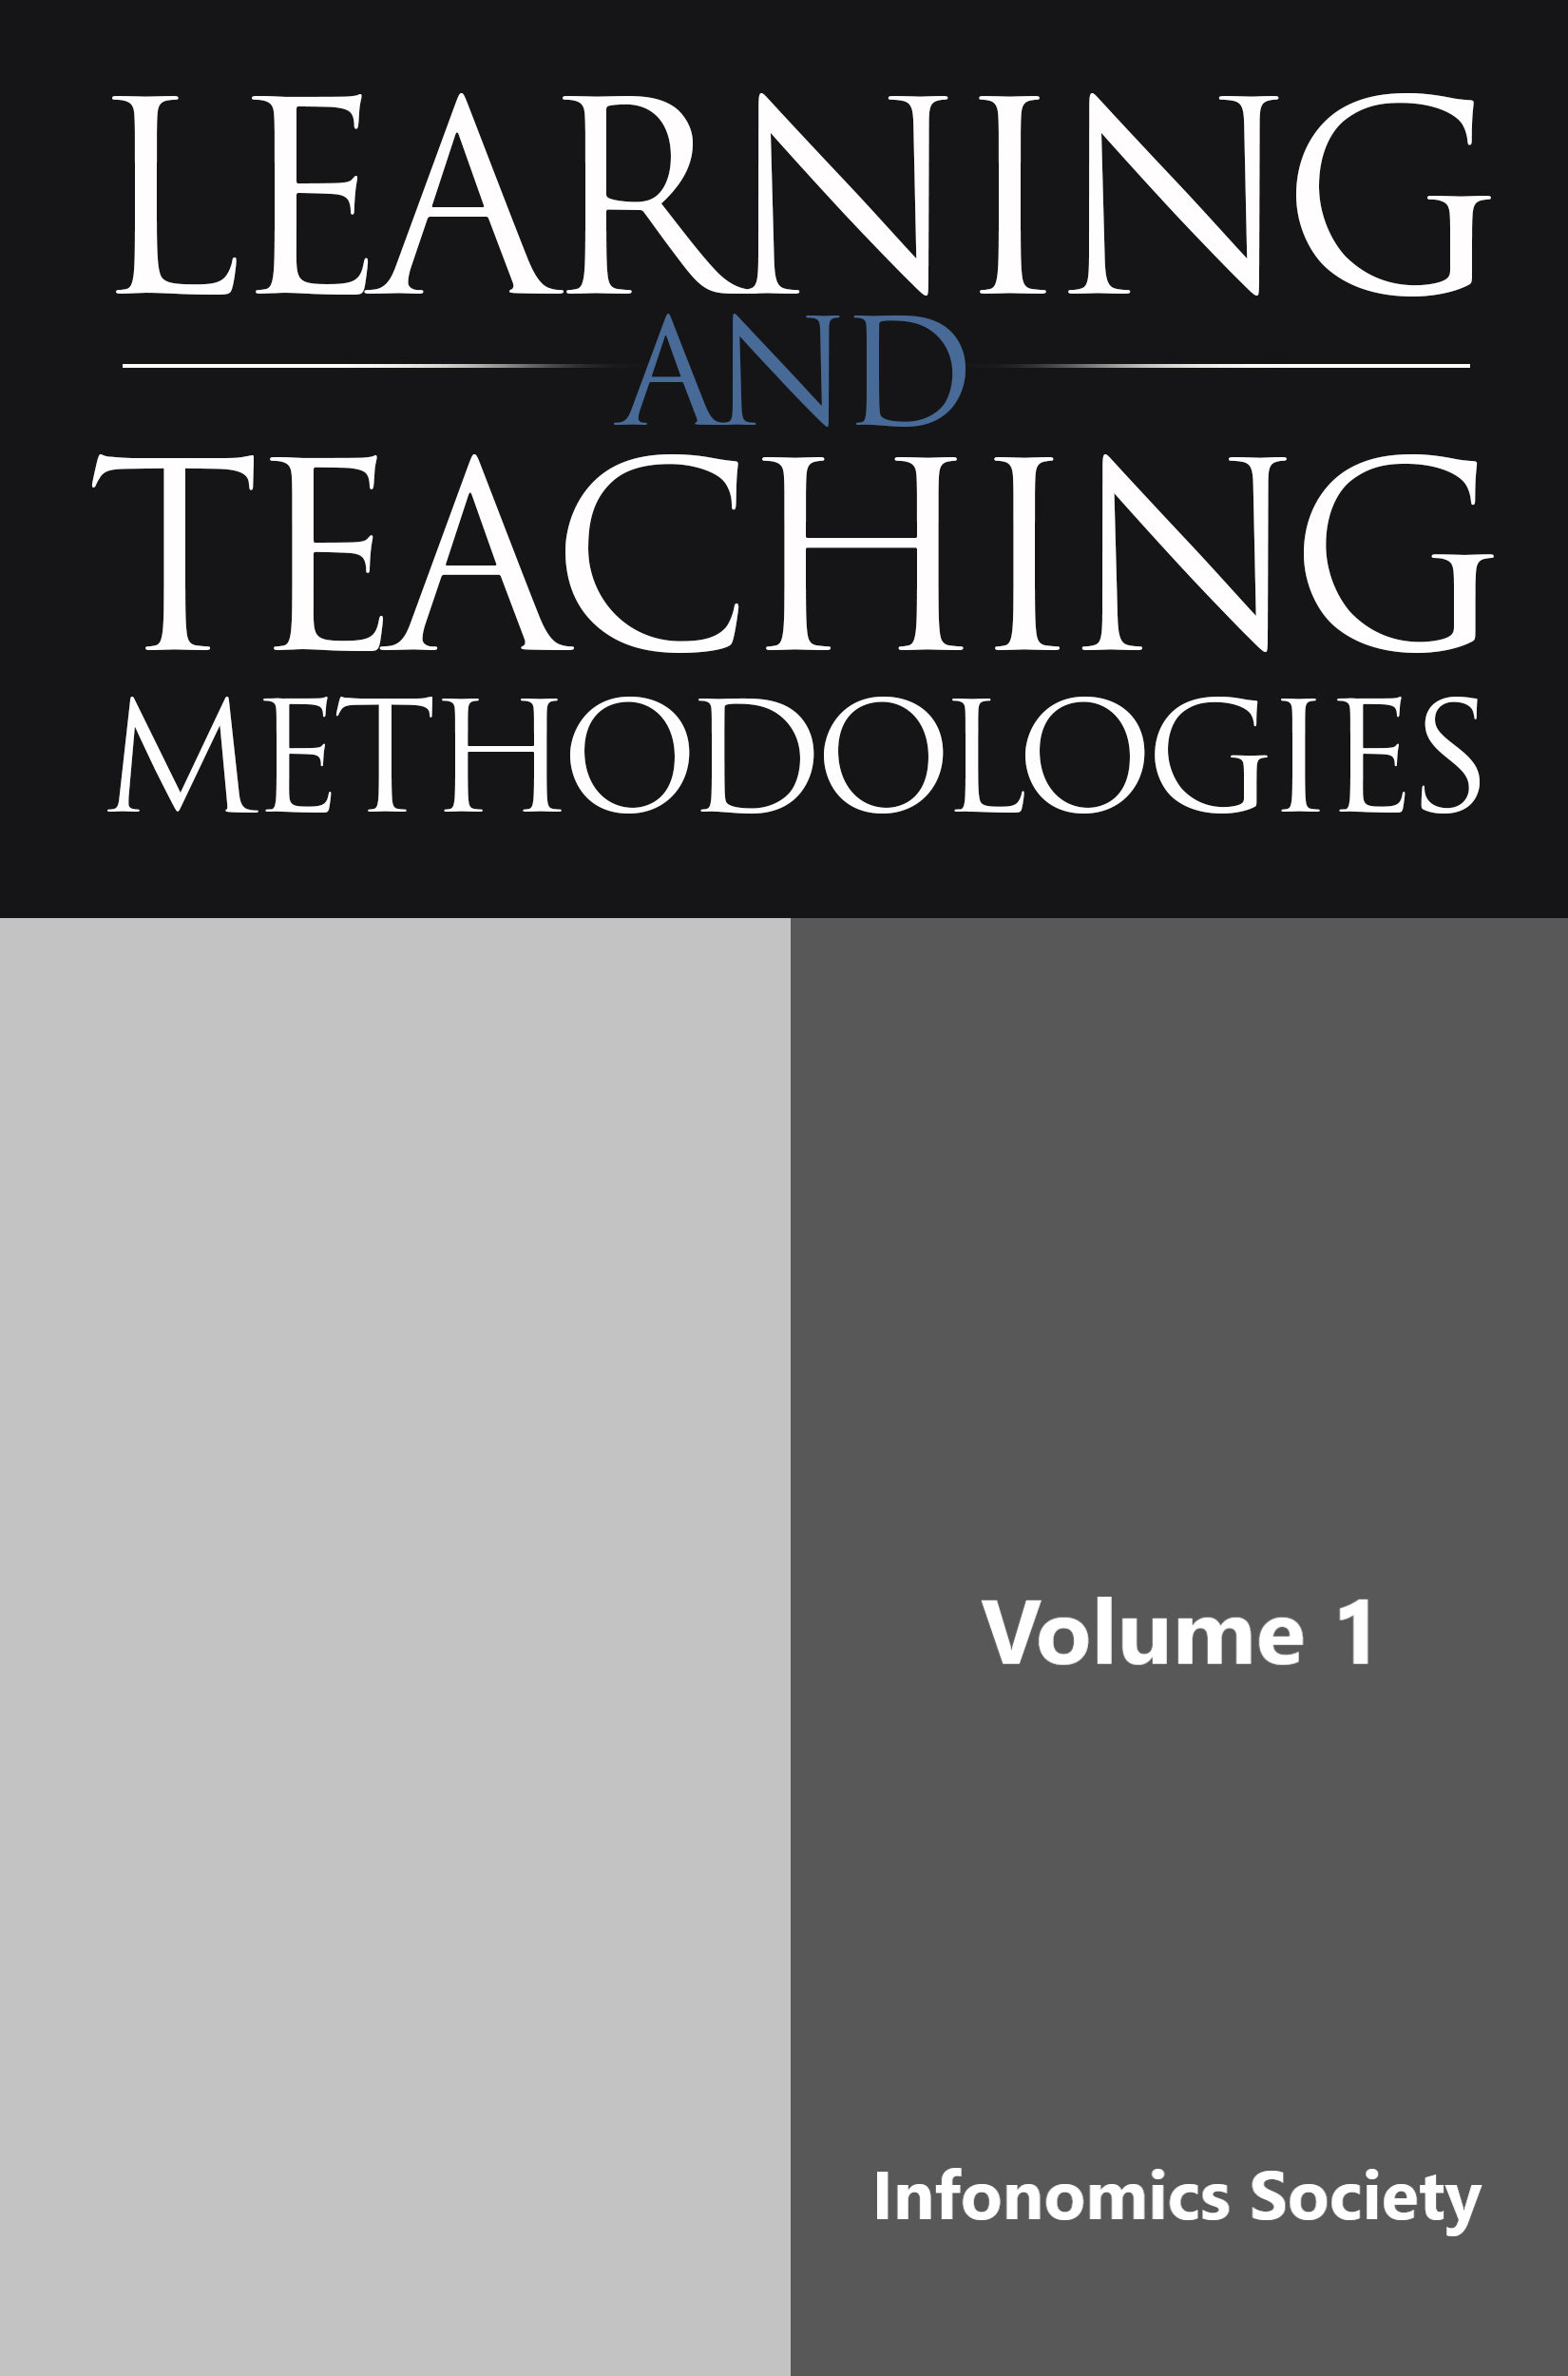 Teaching　Infonomics　Volume　Learning　Methodologies　and　Society